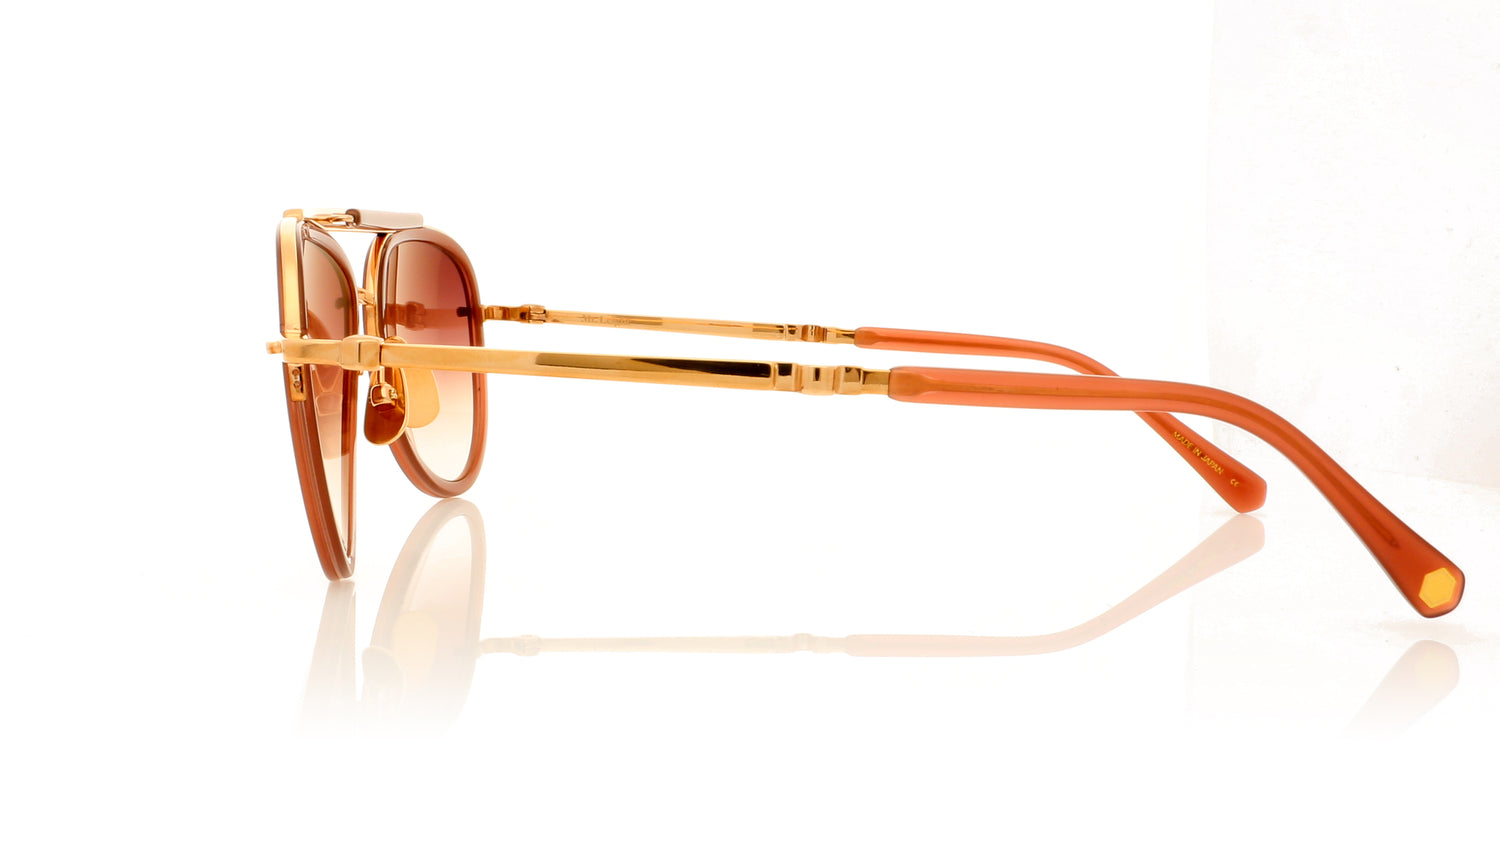 Mr. Leight Doheny SL 18KRG-RW/SU 18K Rose Gold - Rosewood Sunglasses - Side